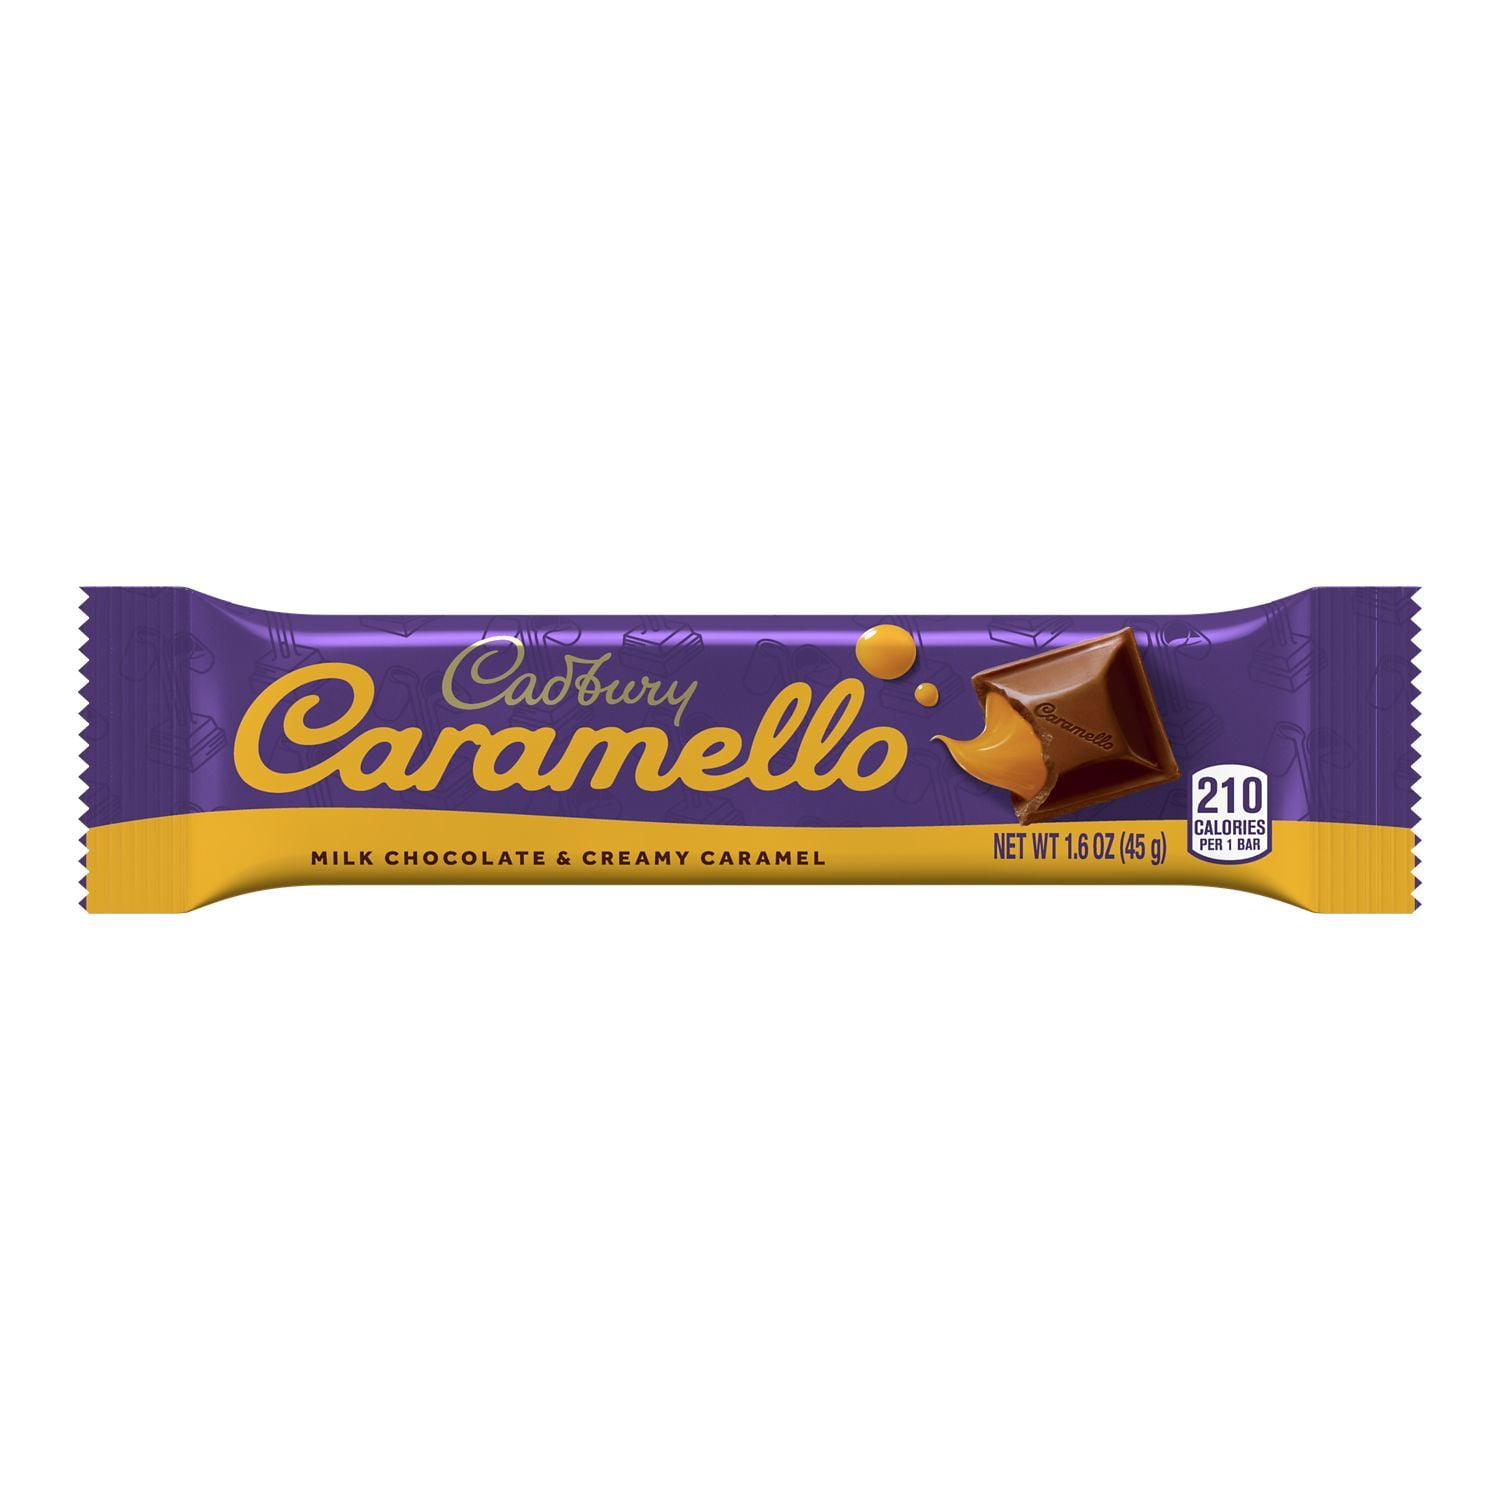 CADBURY, CARAMELLO Milk Chocolate and Creamy Caramel Candy, 1.6 oz, Bar